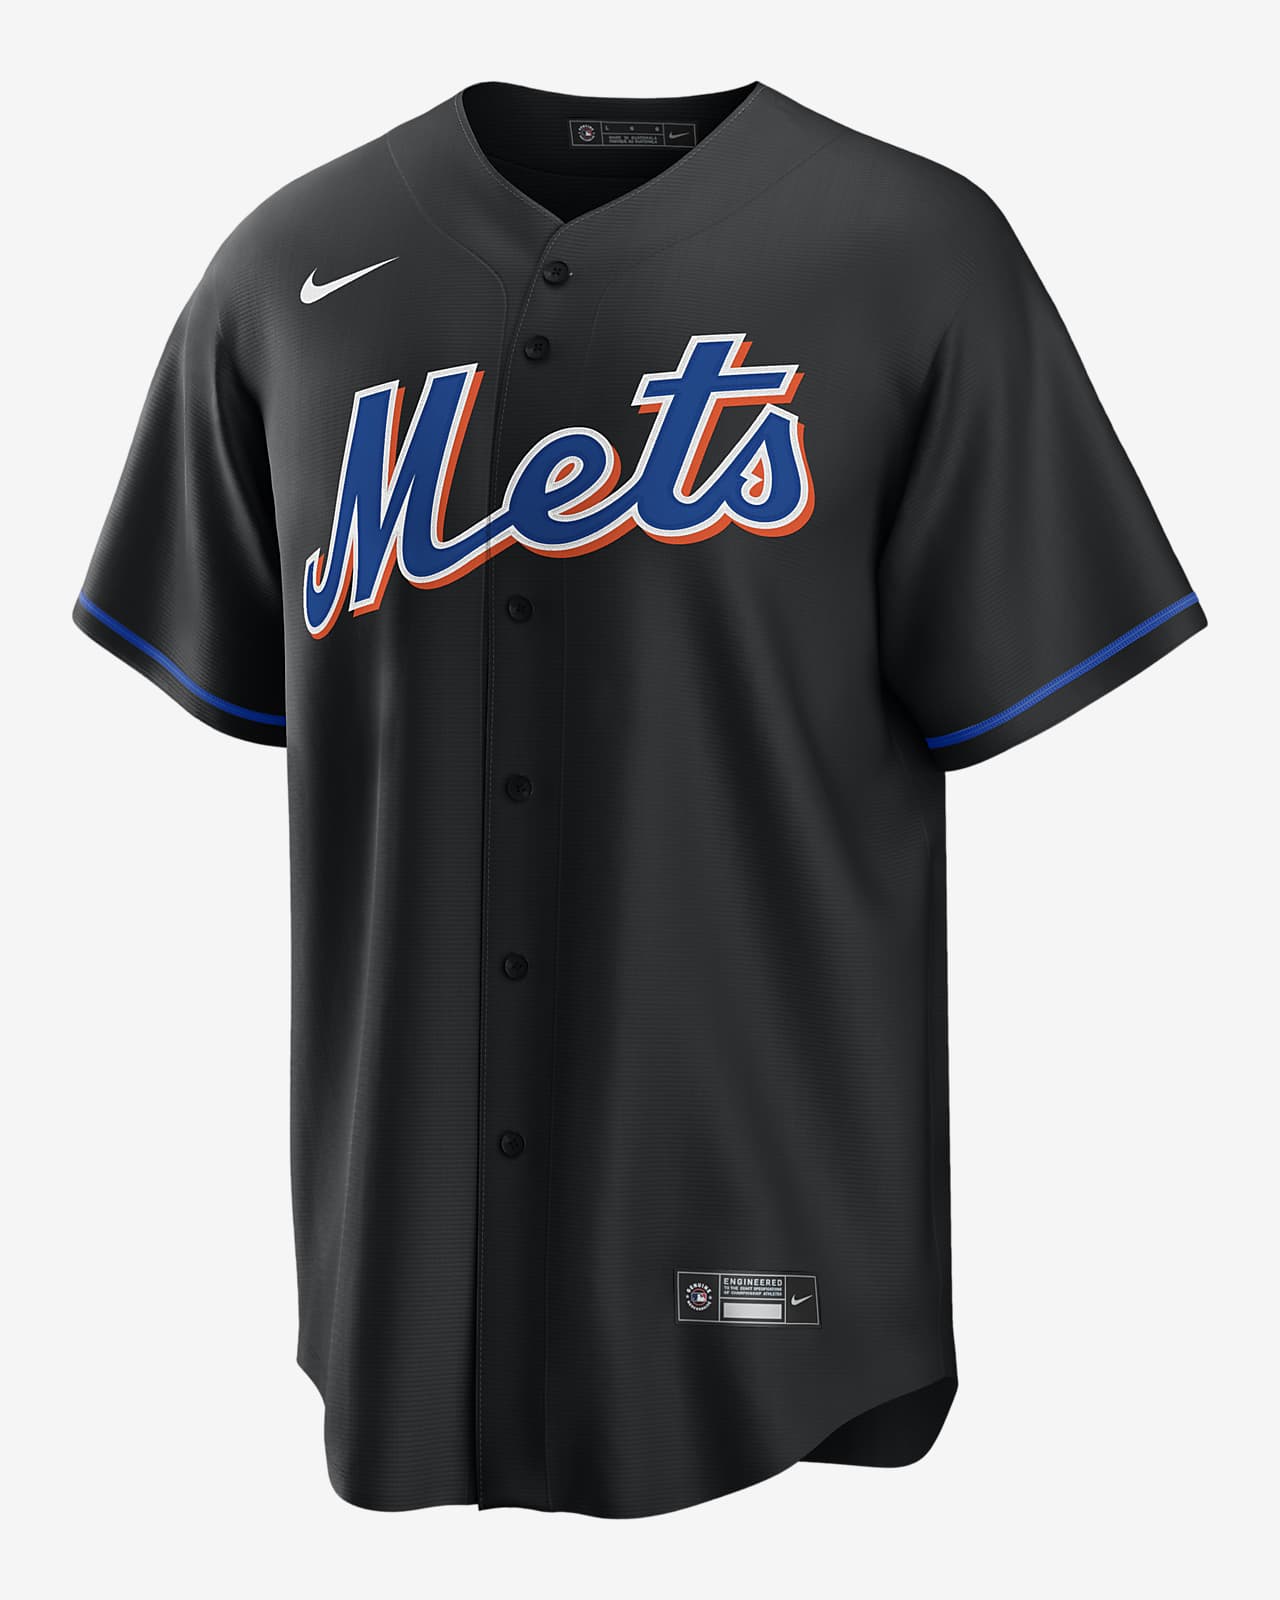 MLB New York Mets (Mike Piazza) Men's Replica Baseball Jersey